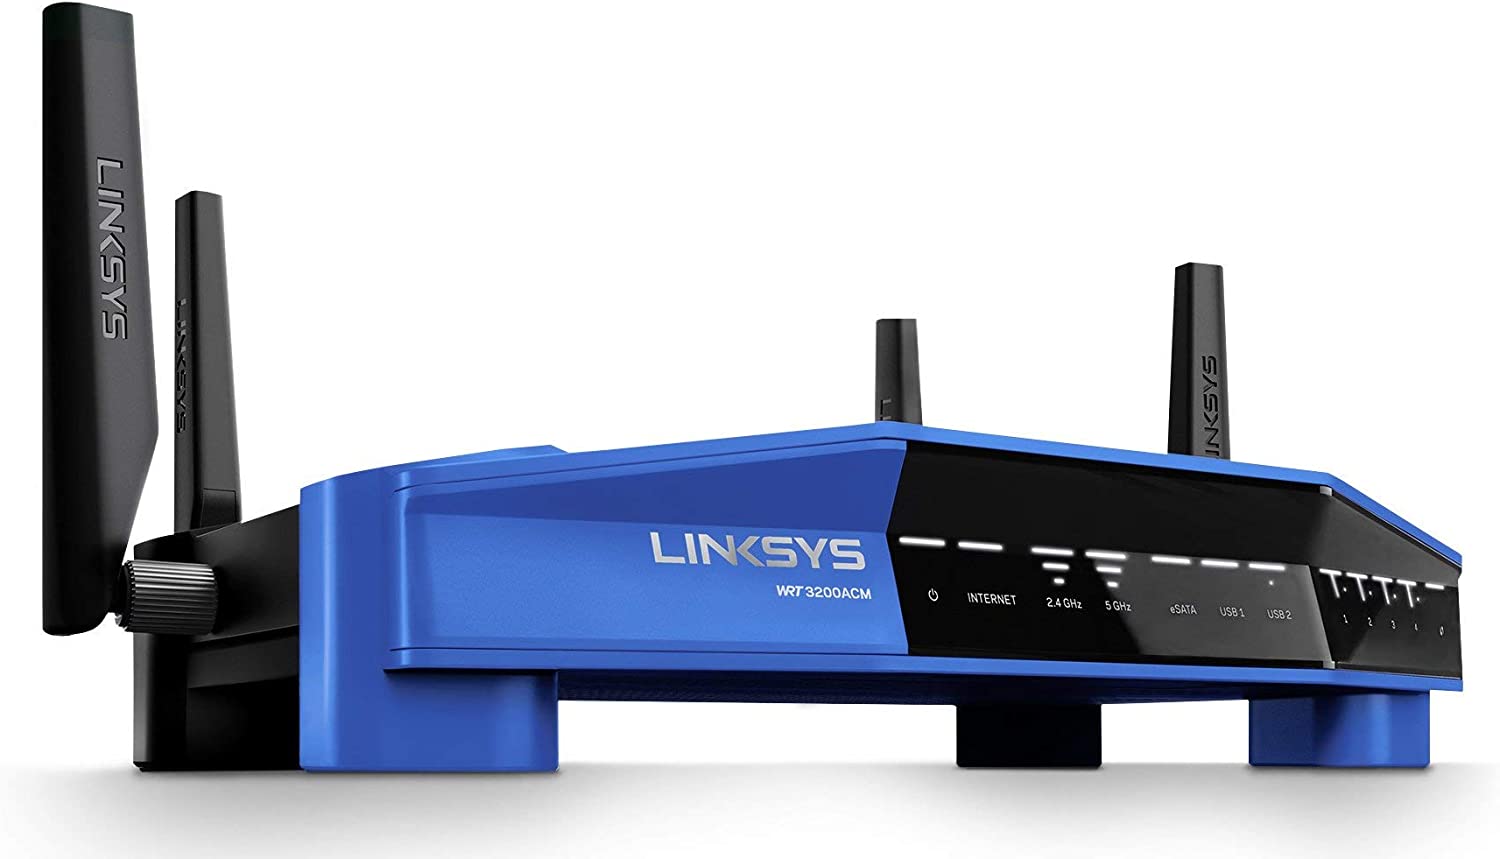 Linksys WRT3200ACM router